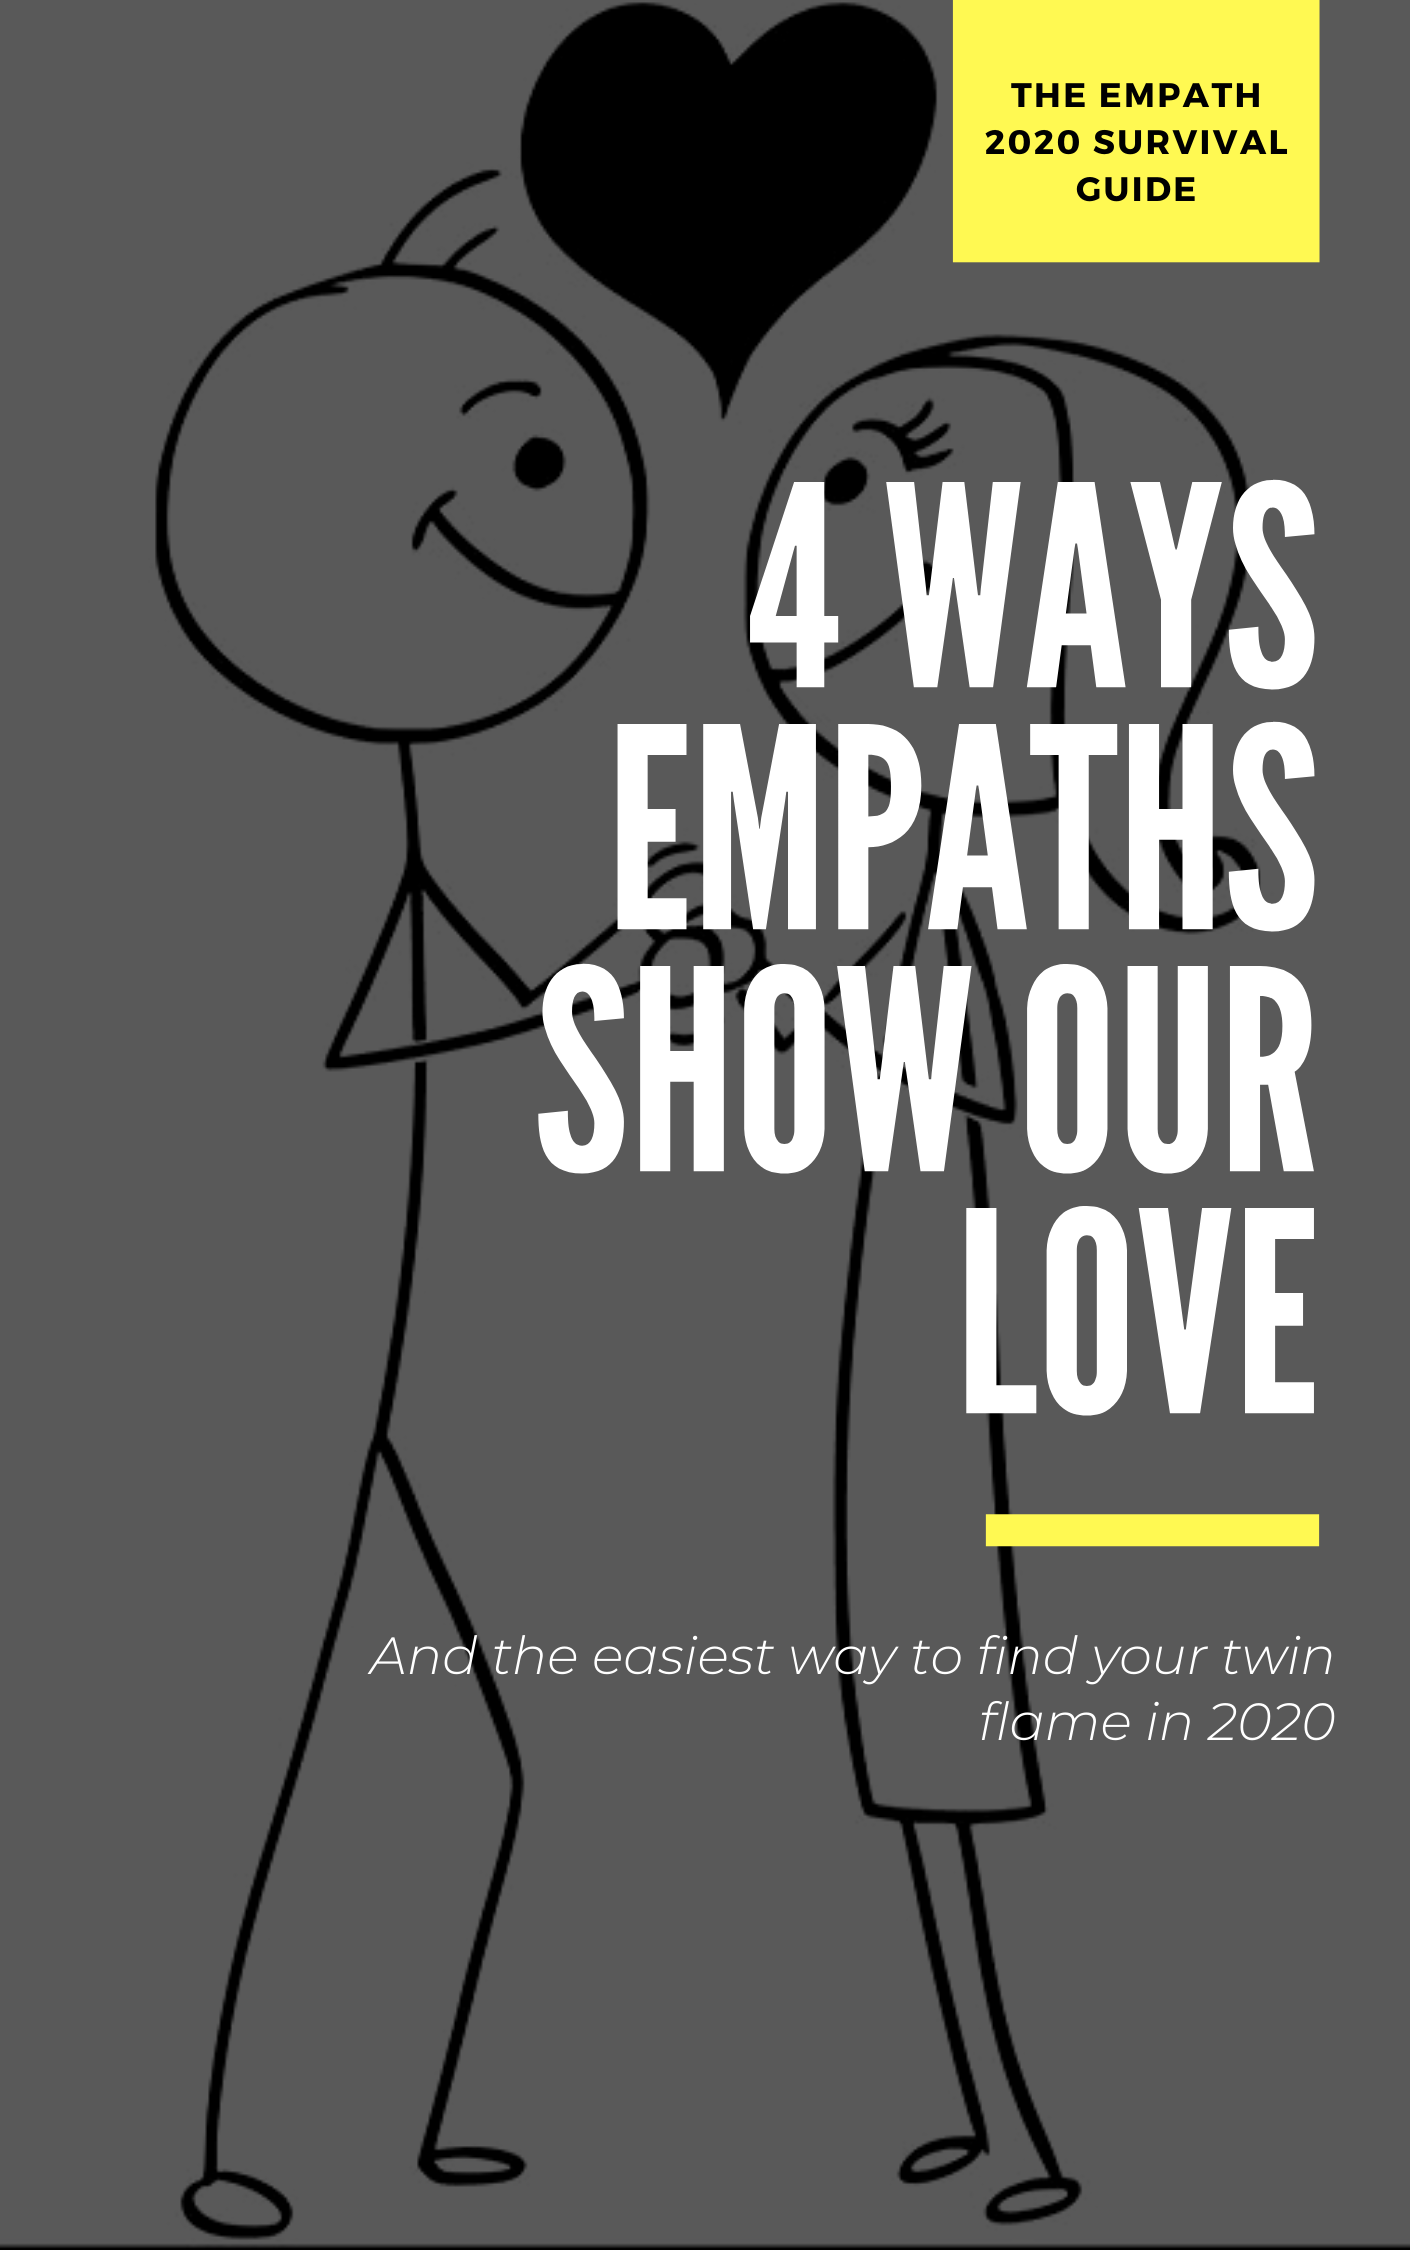 Do Empaths Fall in Love Easily?